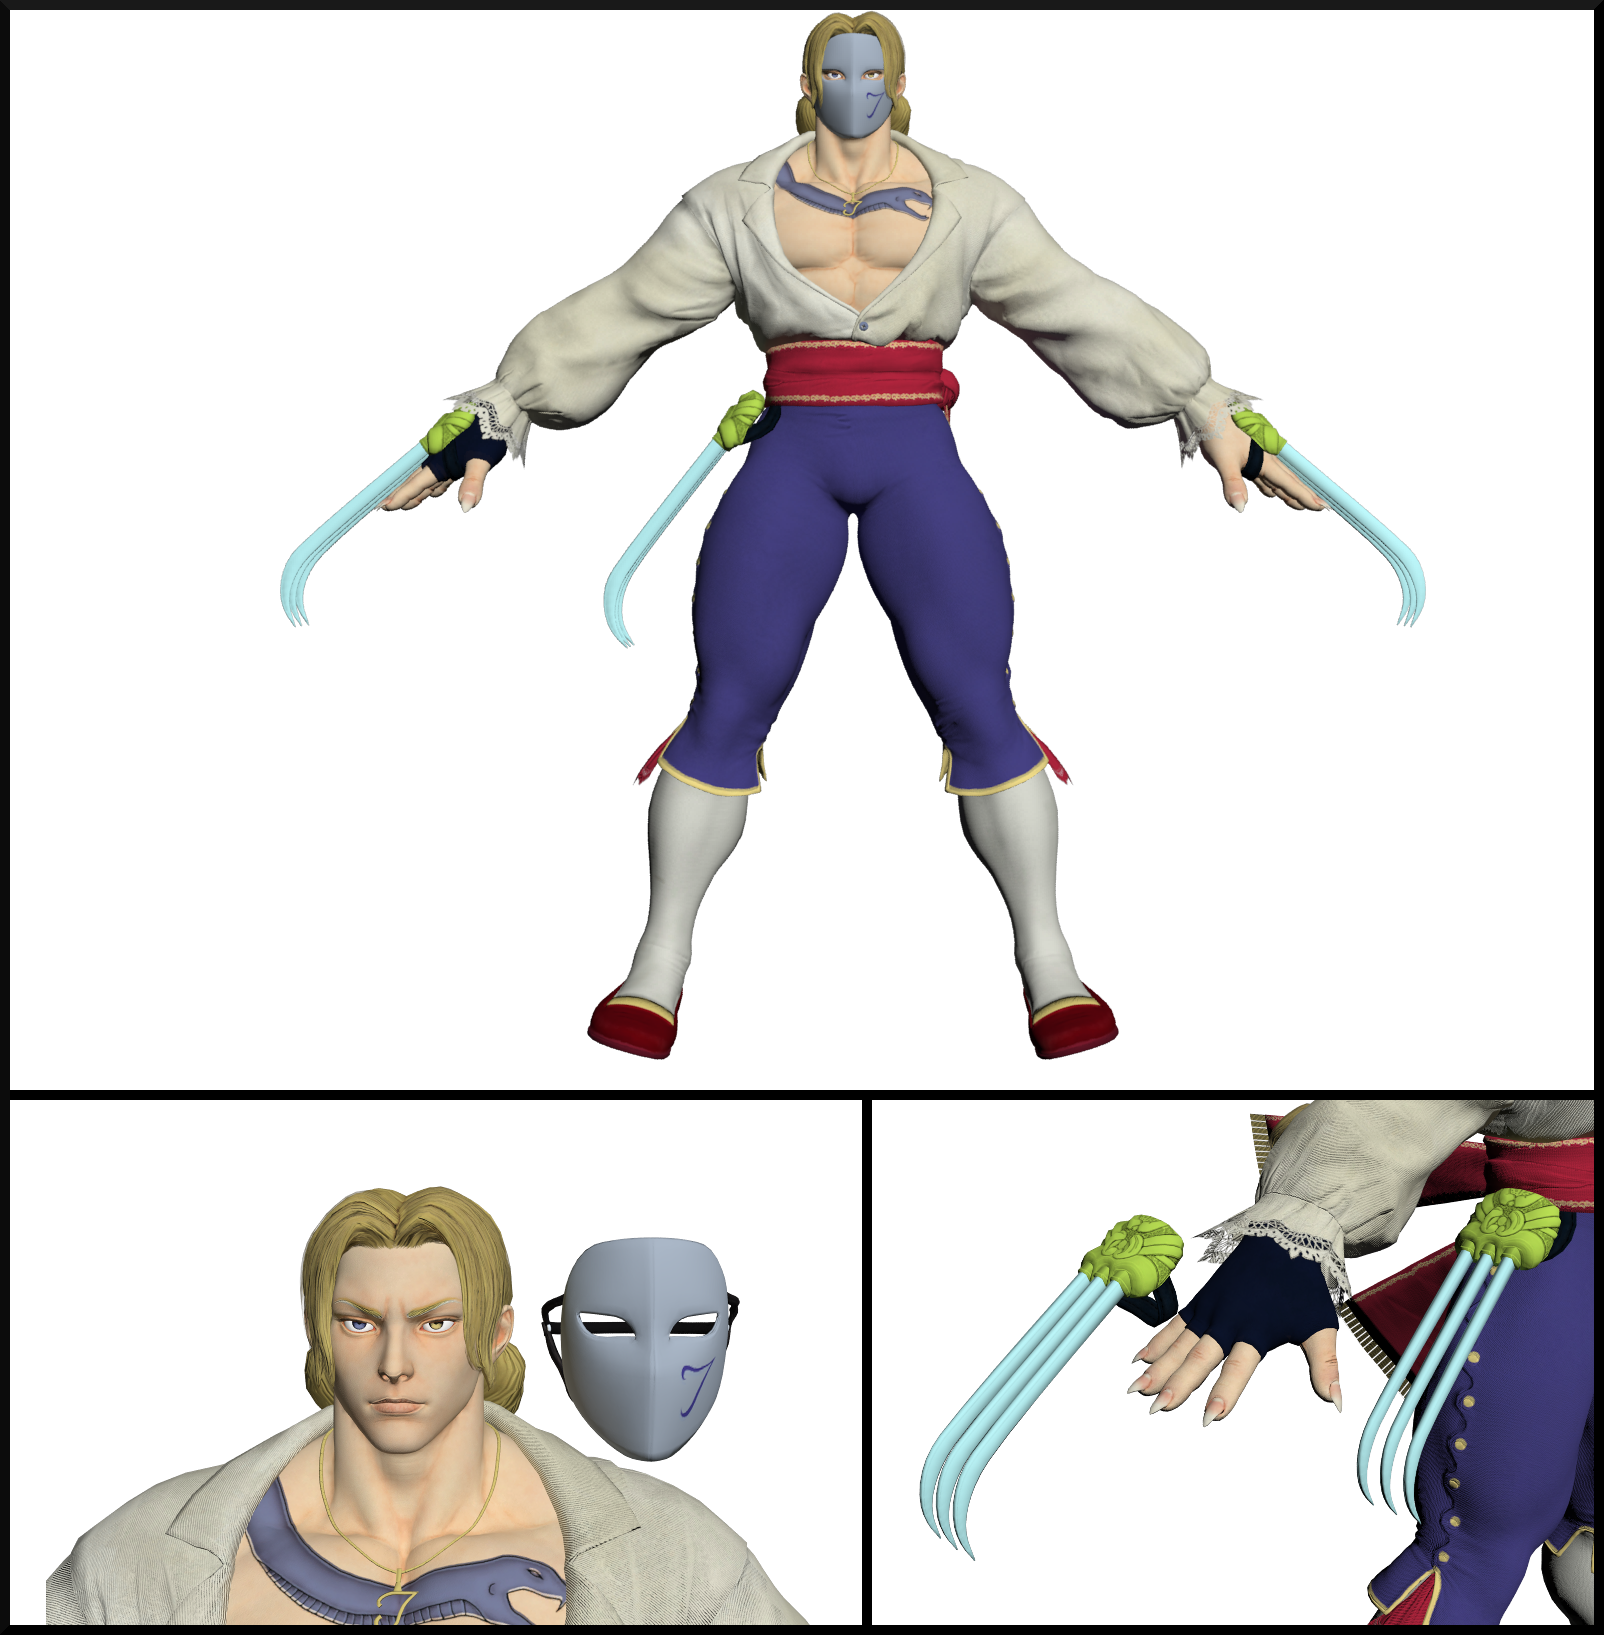 Vega Street Fighter Characters Figure 